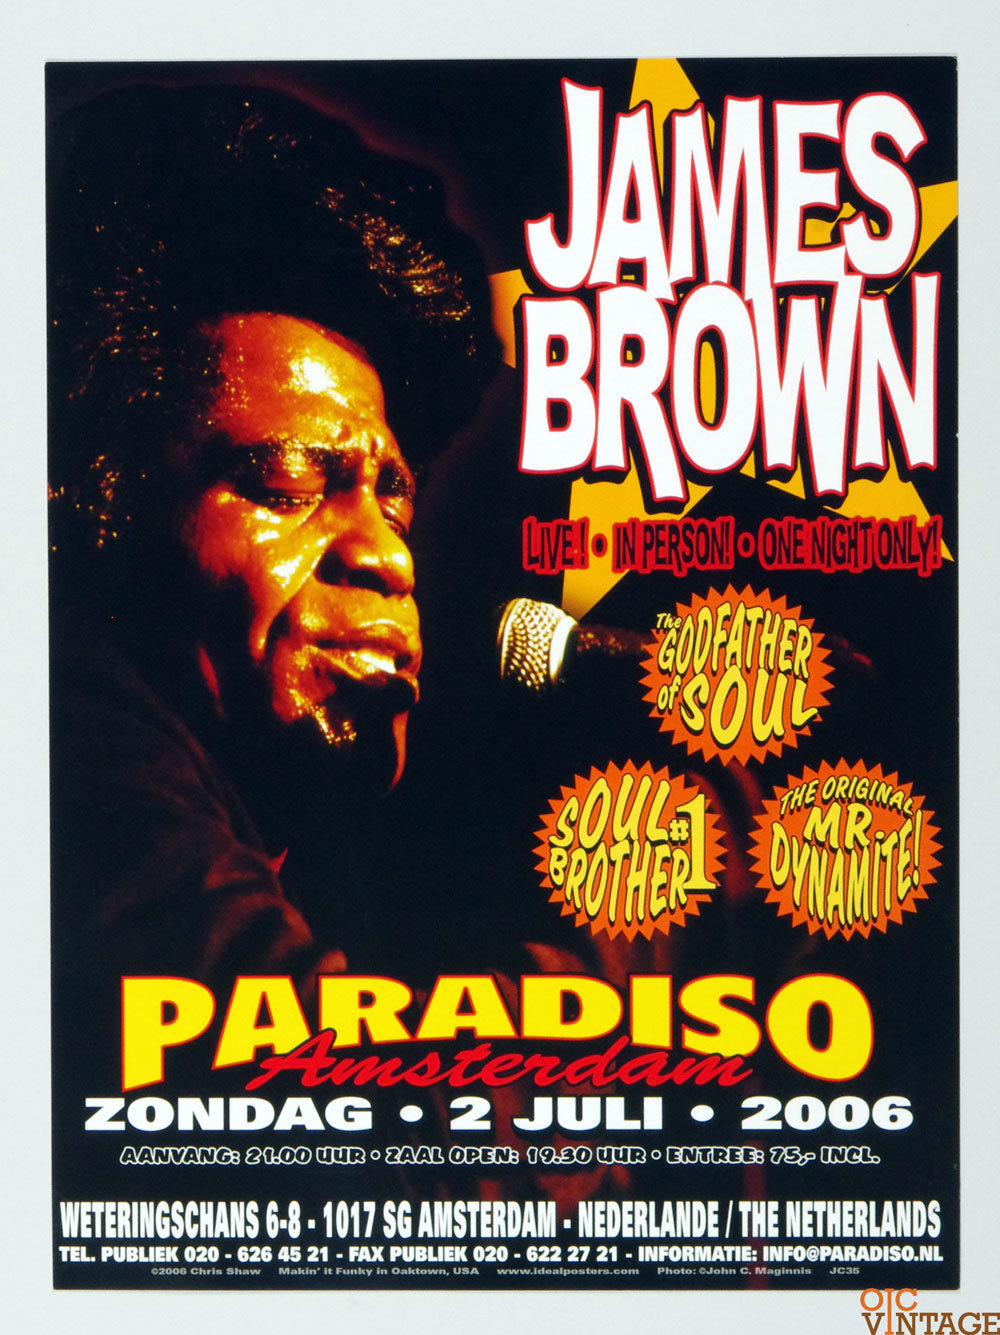 James Brown Poster 2006 Jul 2 Paradiso Amsterdam Chris Shaw